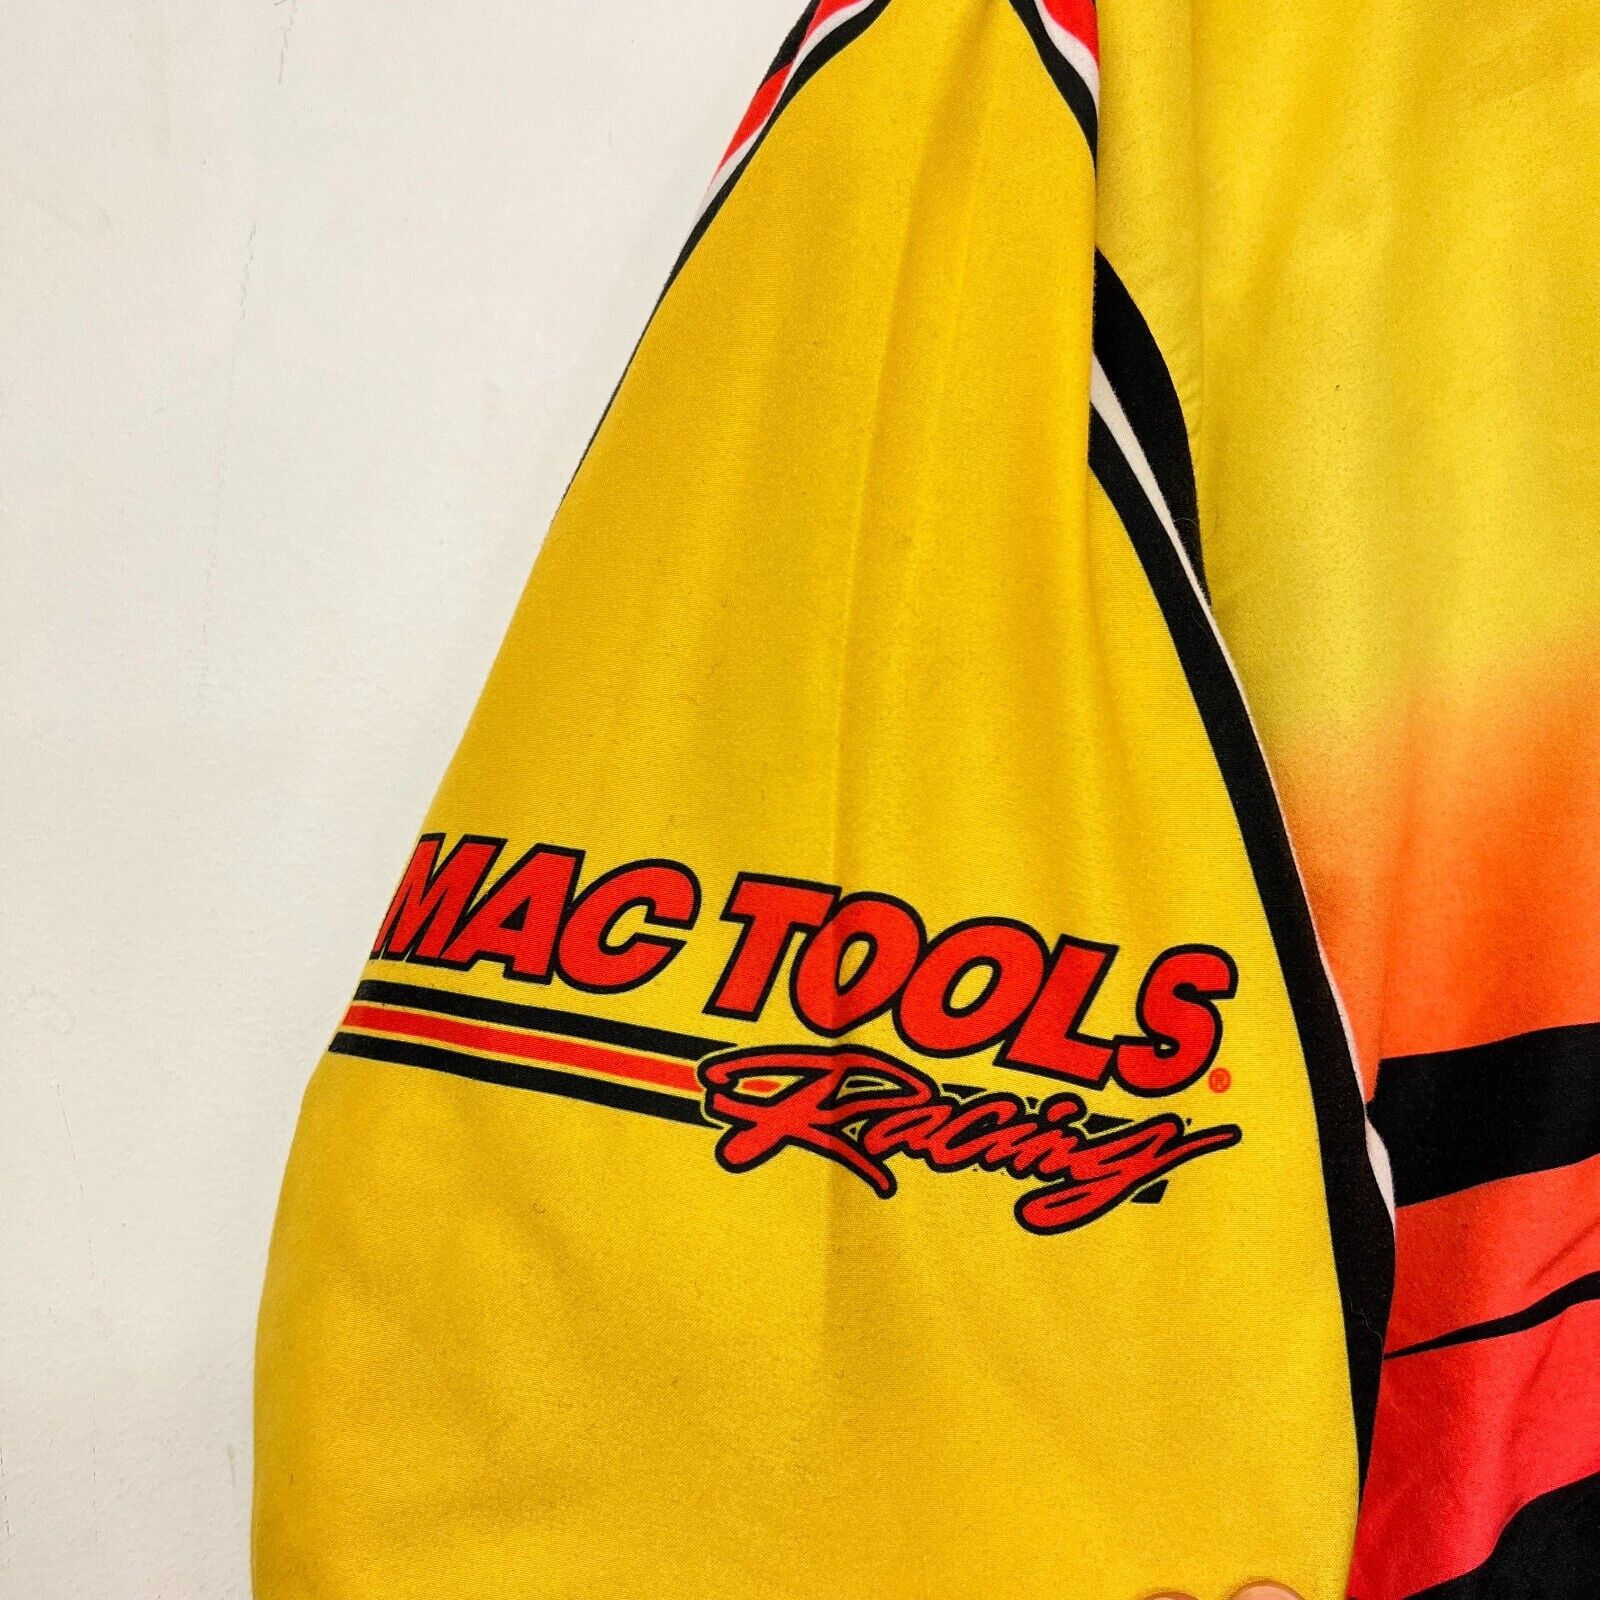 Mac Tools Racing Snap Button Winter Jacket Size XL